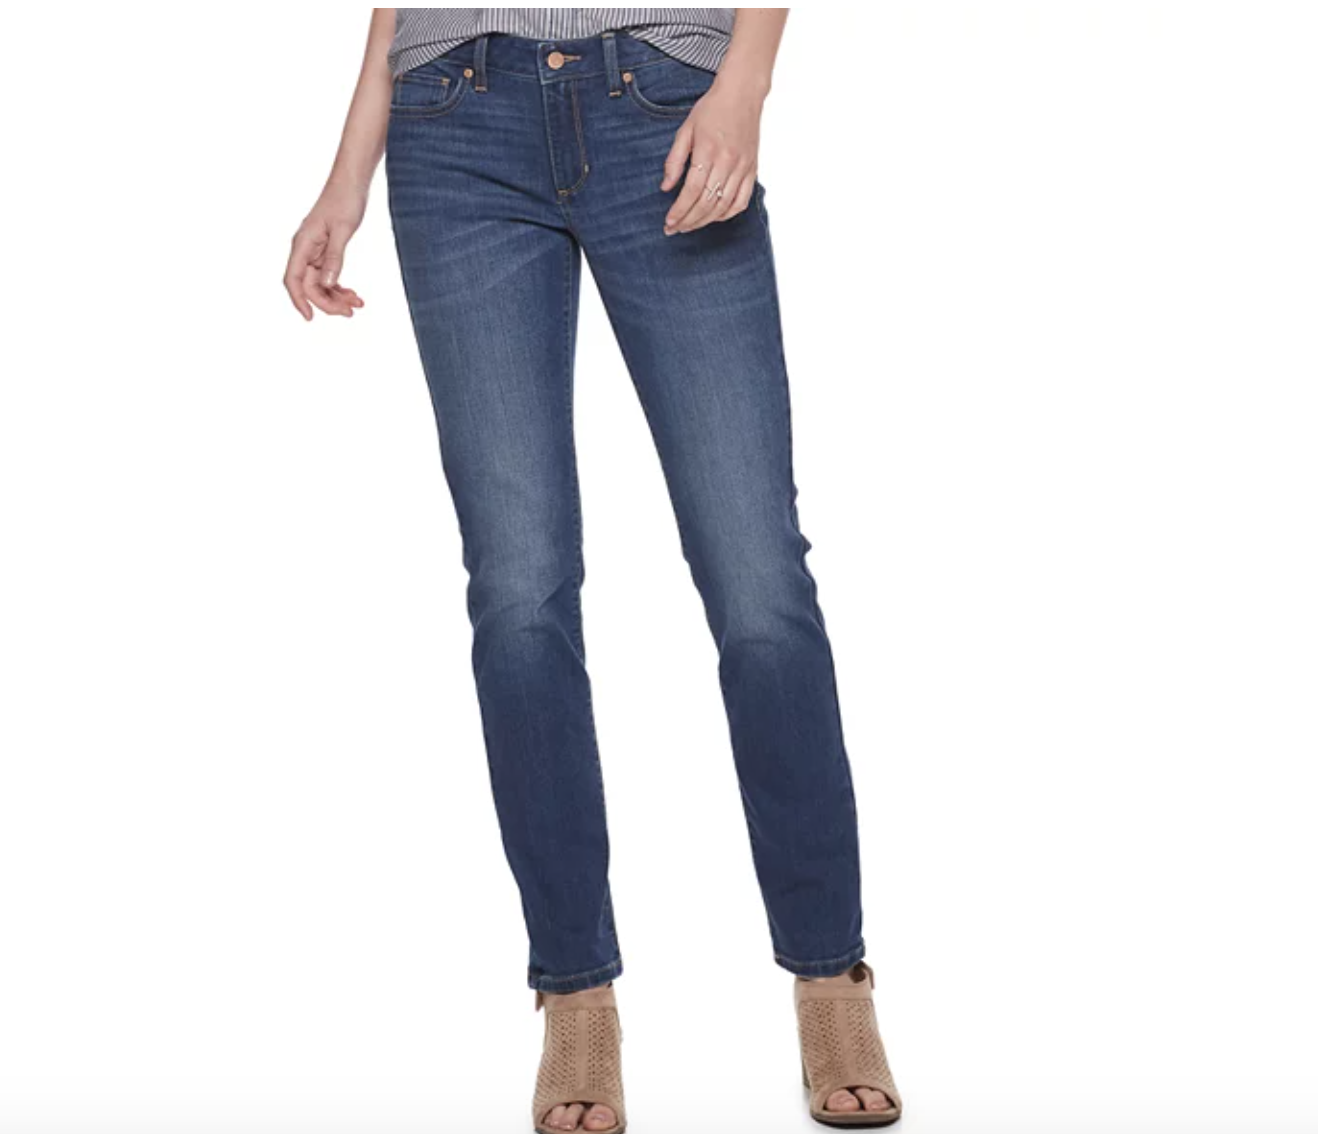 Kohl's: Women's Sonoma Jeans - 2 for $29.98 - SaveSpark